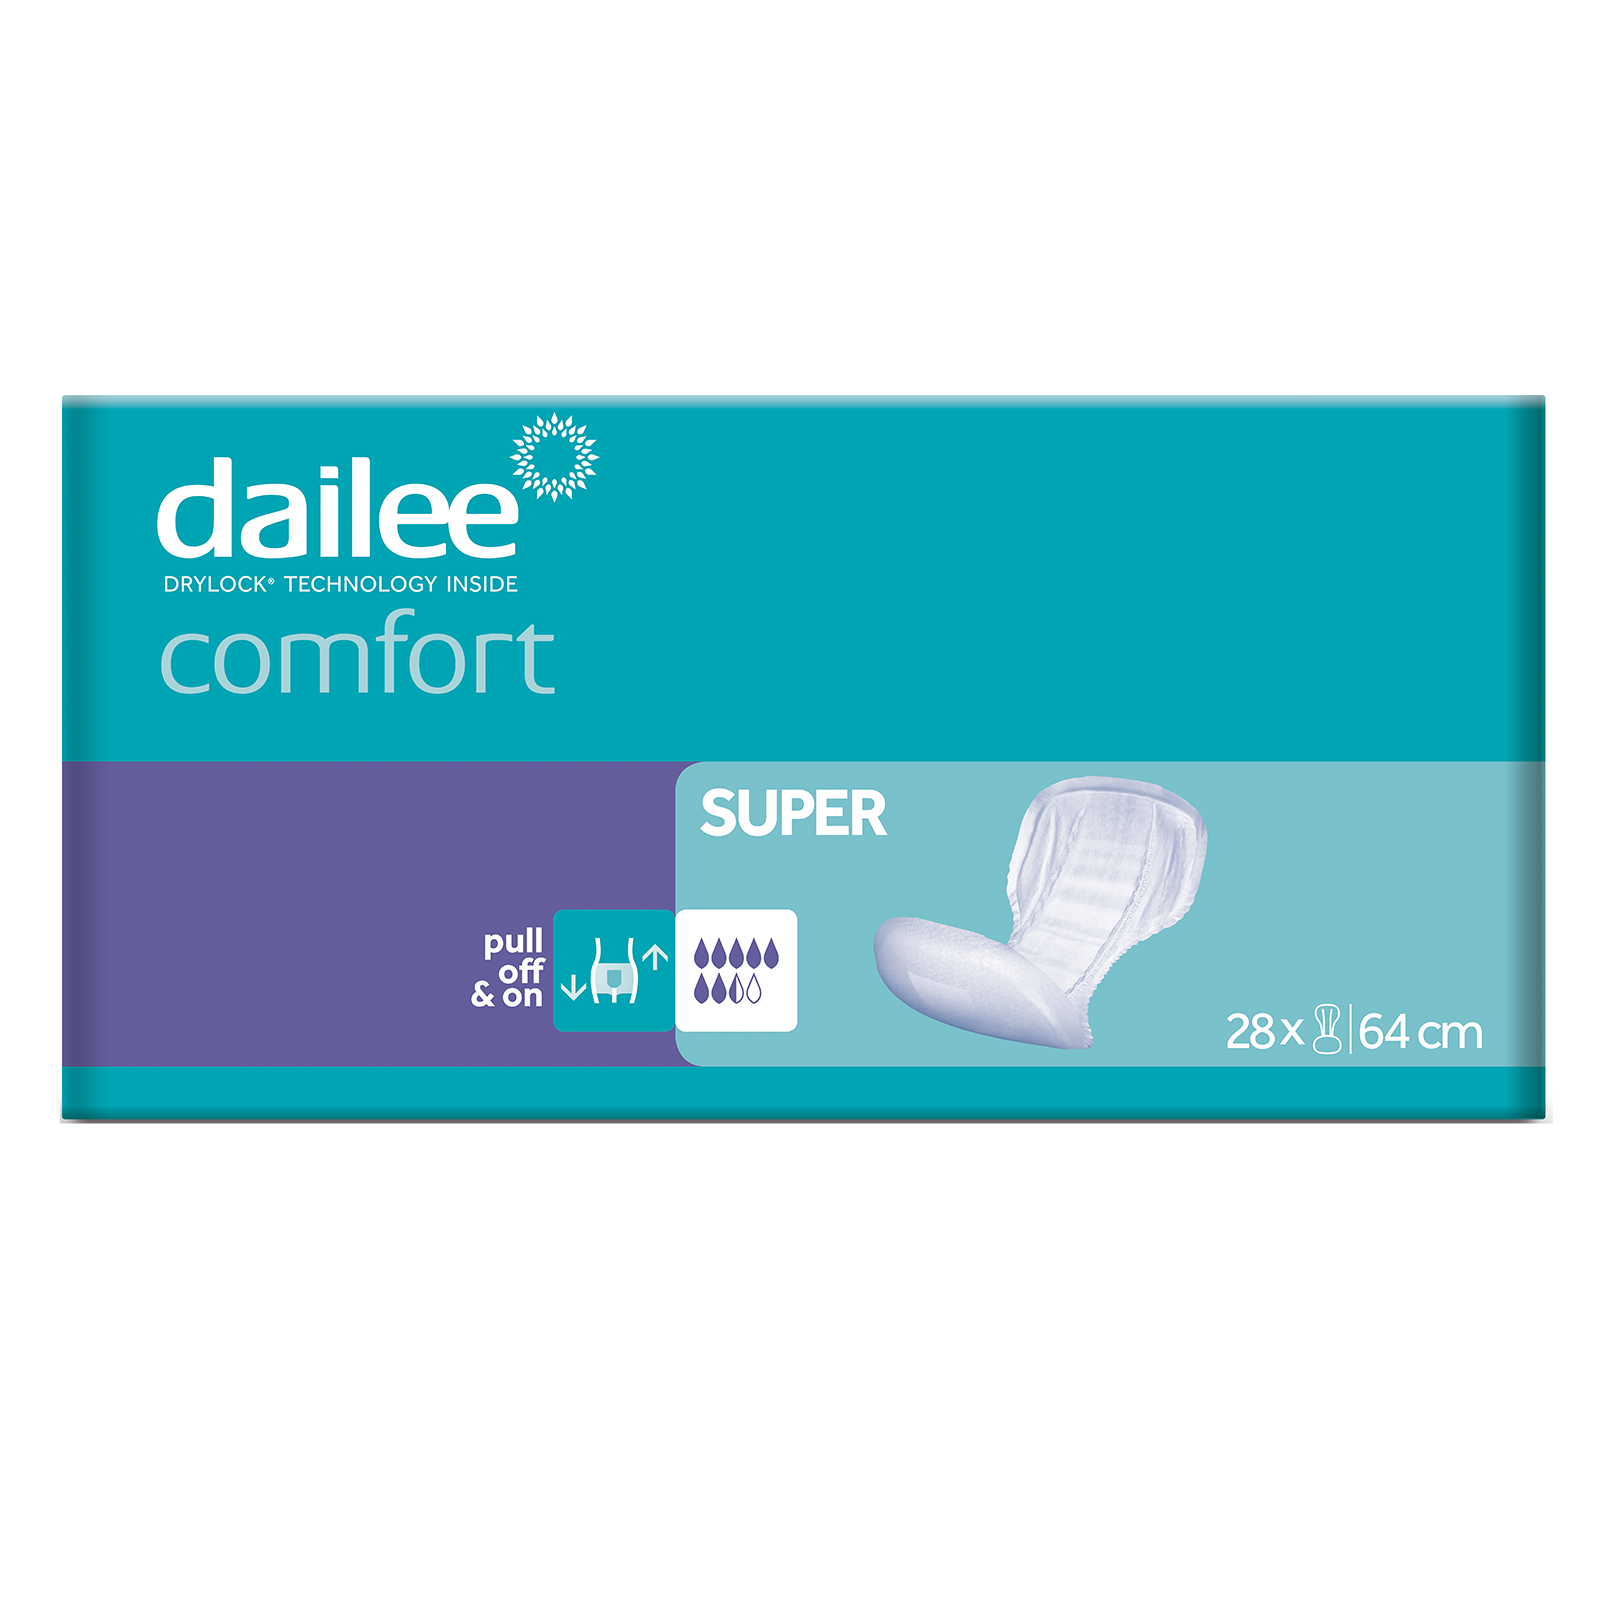 dailee_comfort_super_thumb